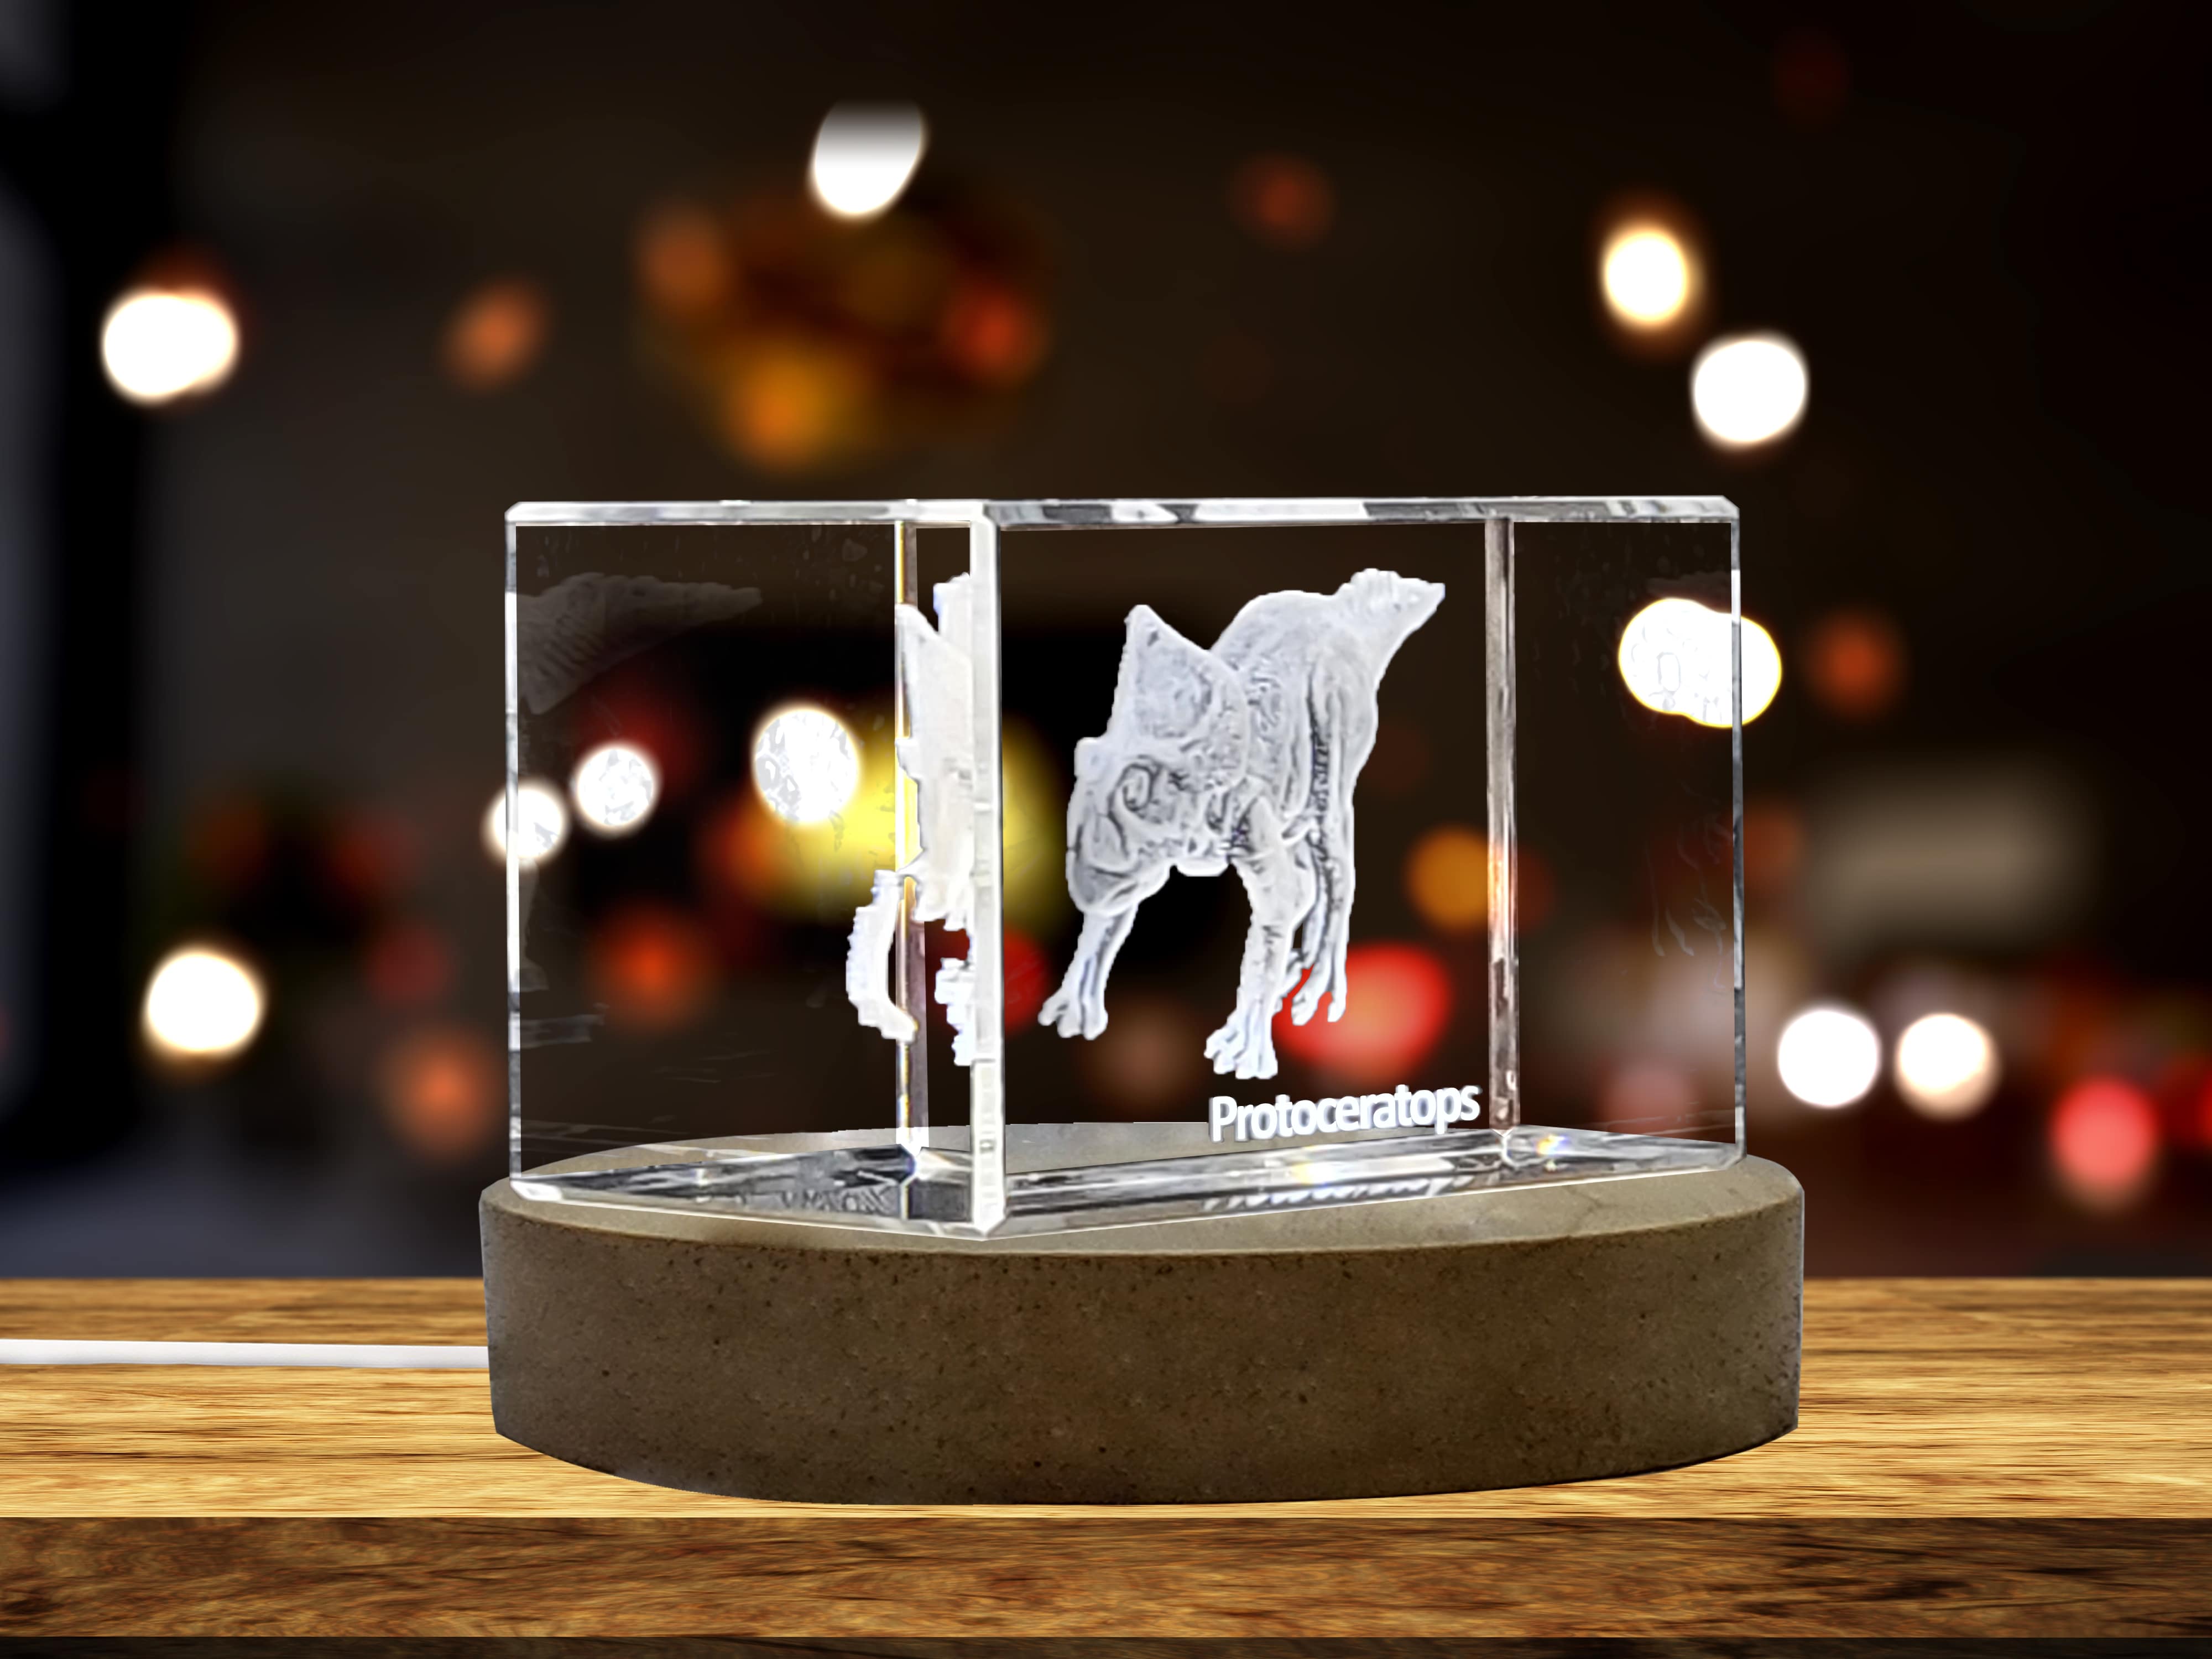 Protoceratops Dinosaur 3D Engraved Crystal 3D Engraved Crystal Keepsake/Gift/Decor/Collectible/Souvenir A&B Crystal Collection